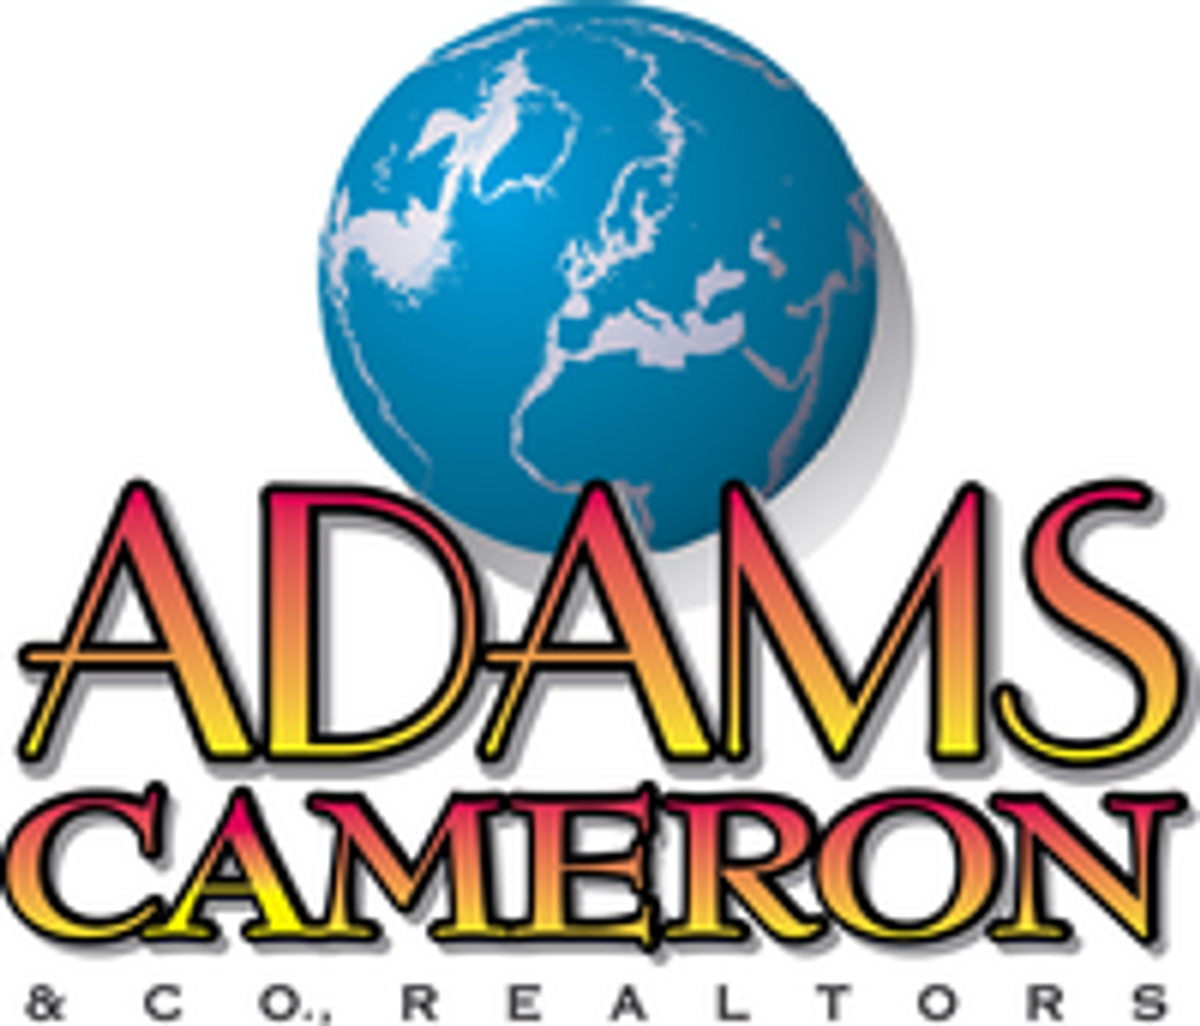 Photo for Stephen Adams, Listing Agent at Adams, Cameron & Co., Realtors